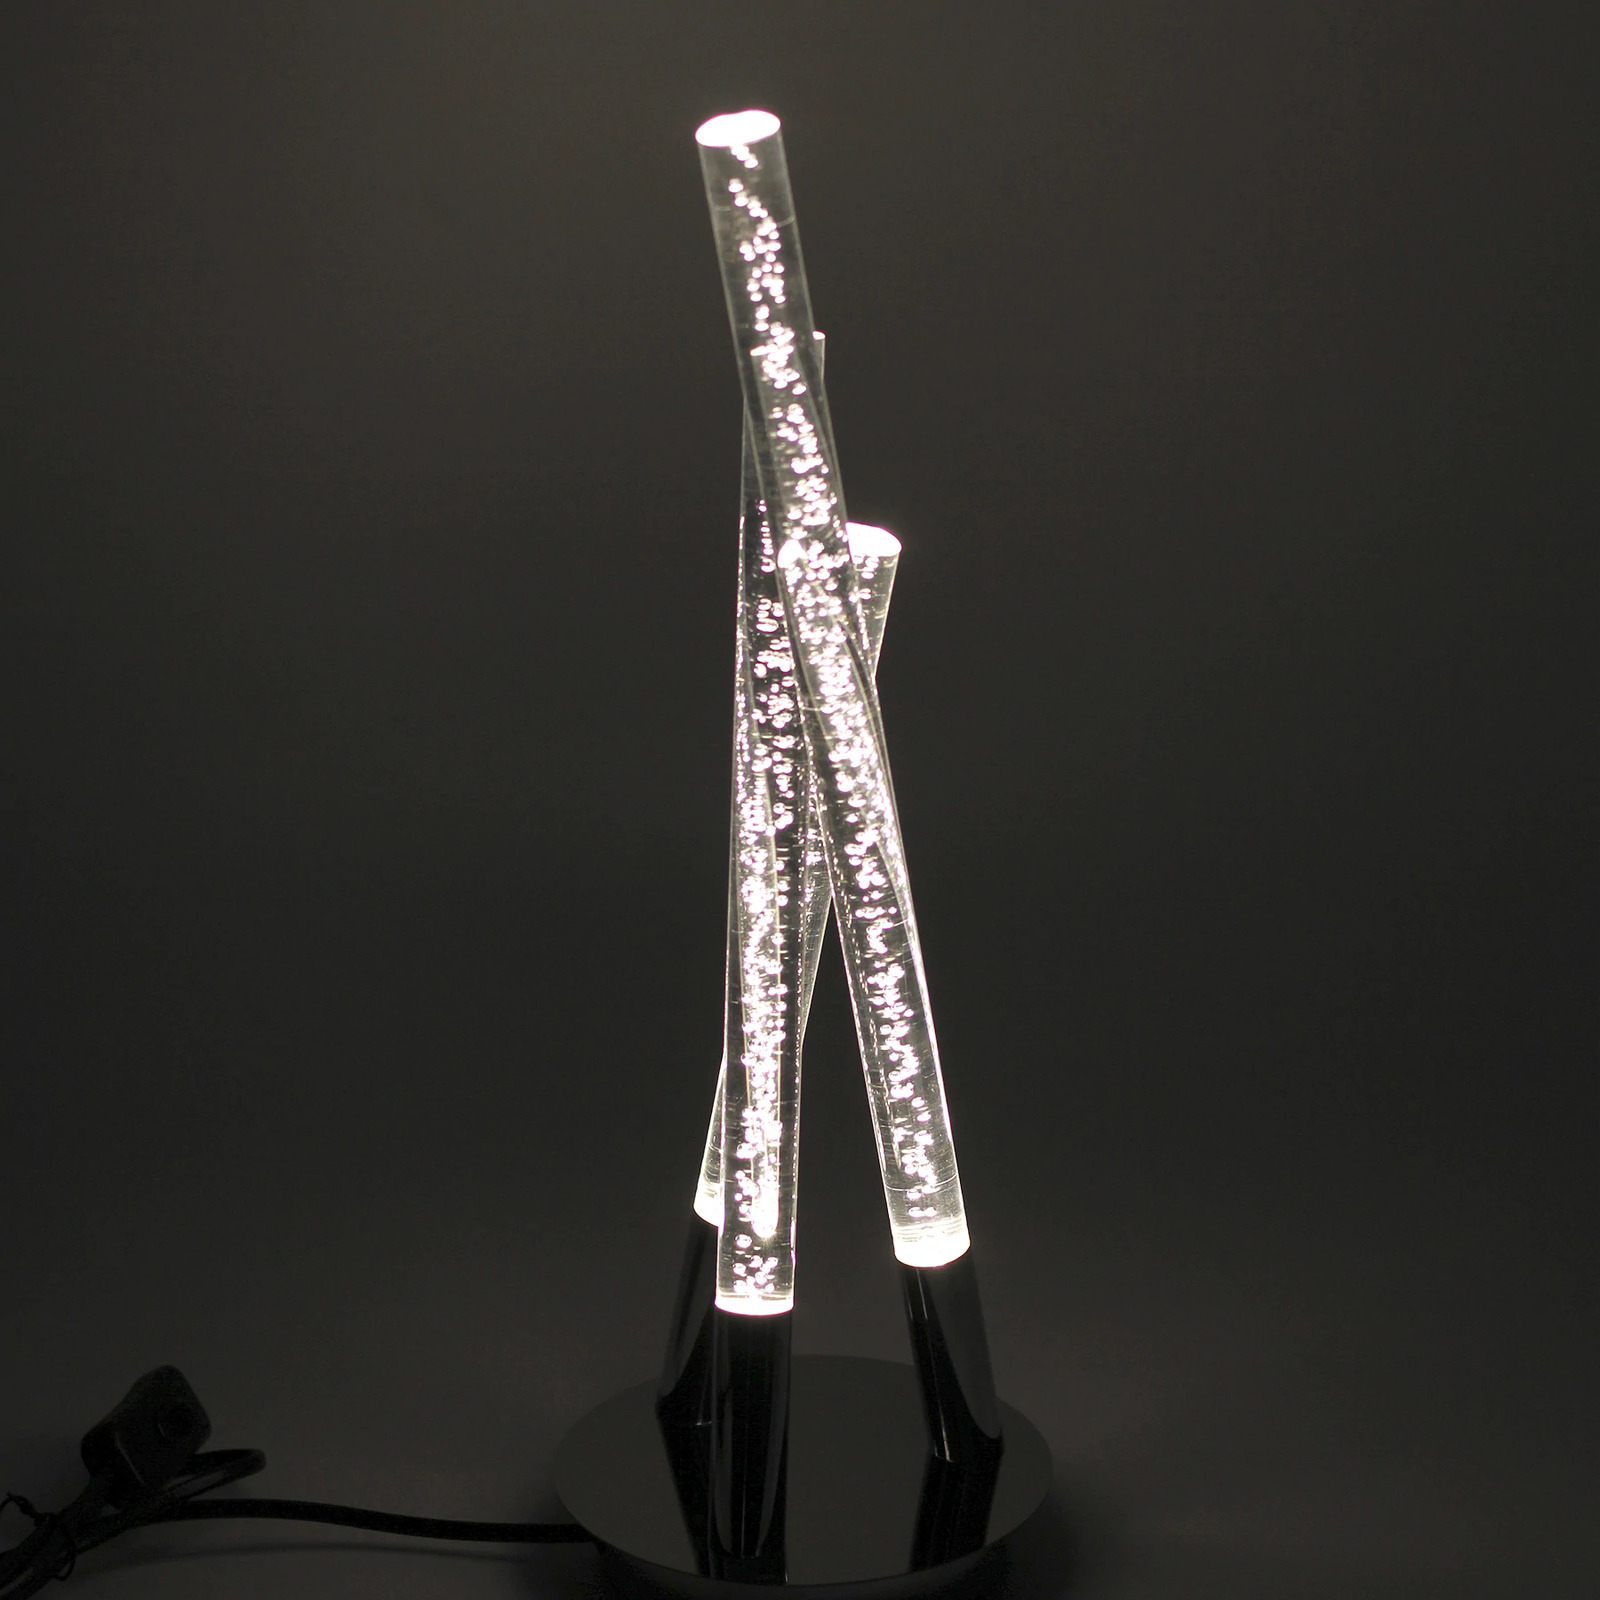 Mina LED Table Lamp